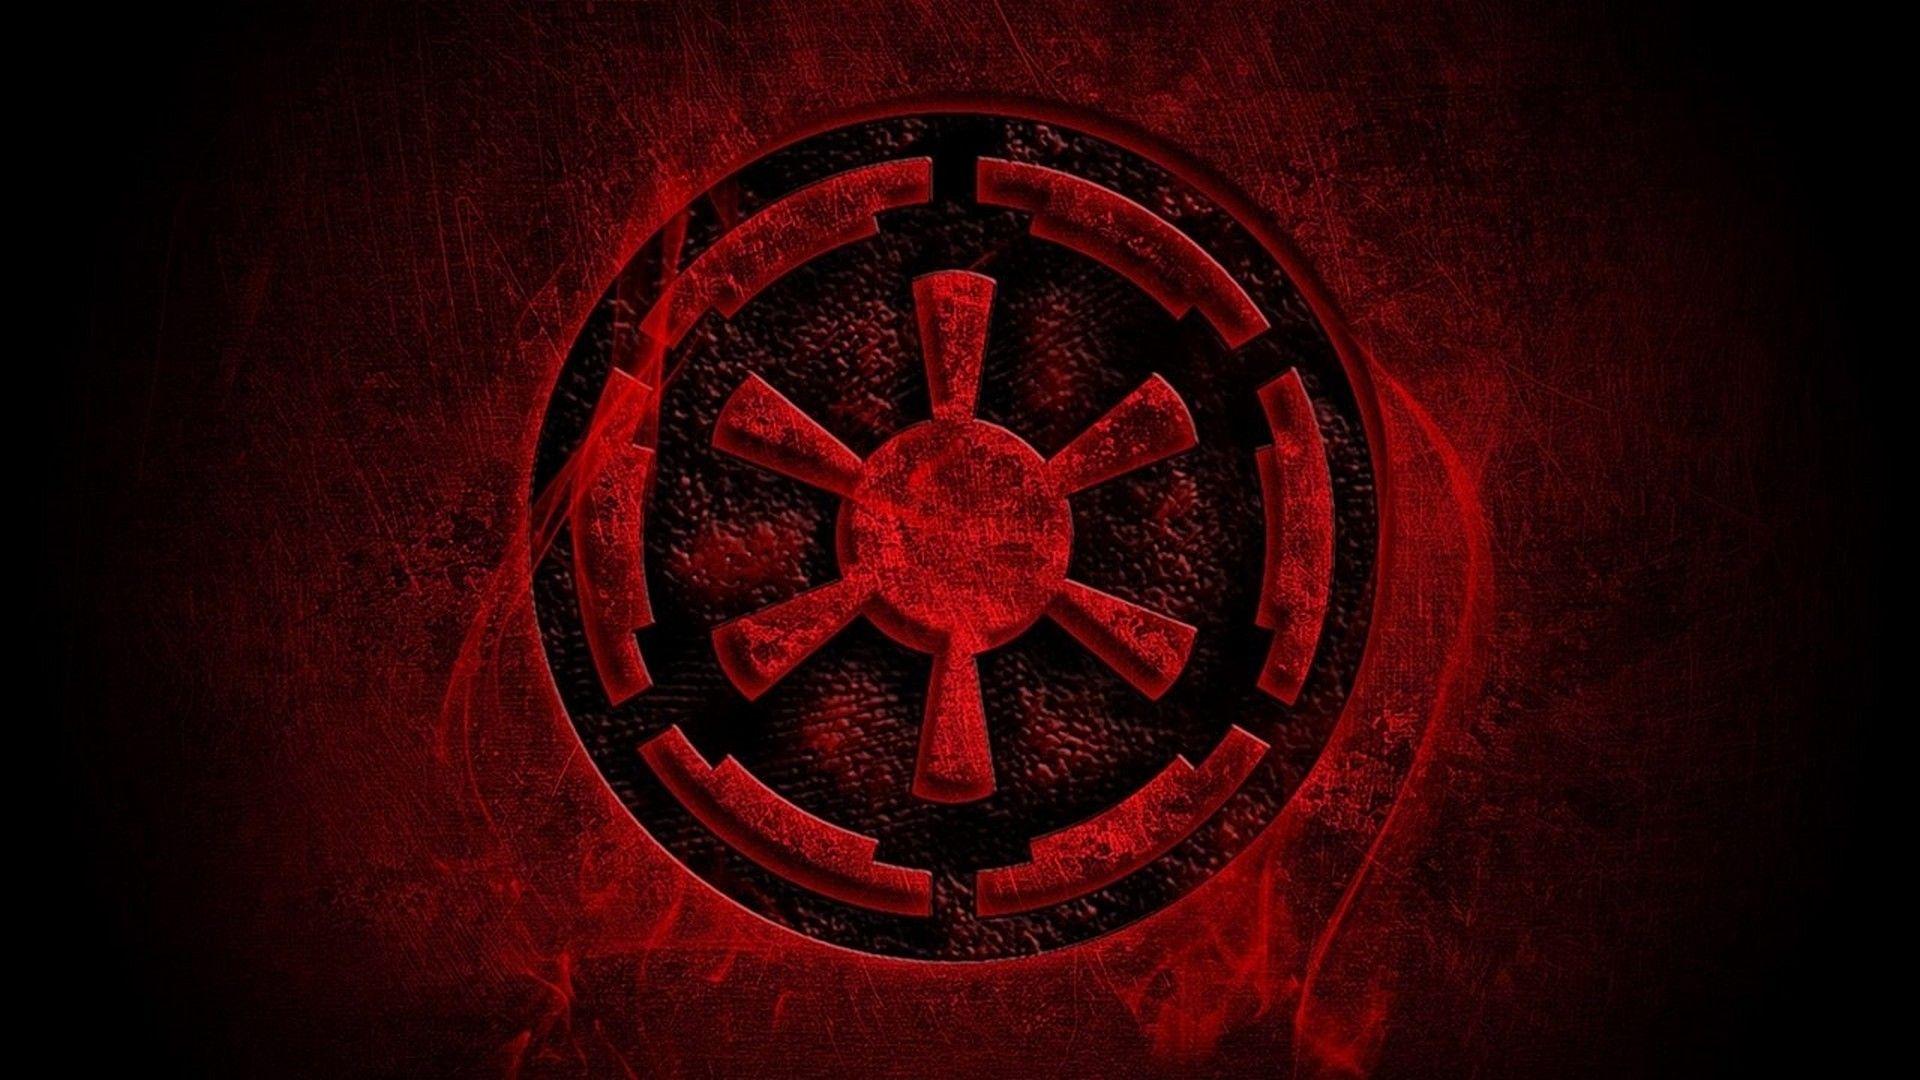 Star Wars Galactic Empire Logo Wallpaper. Star wars the old